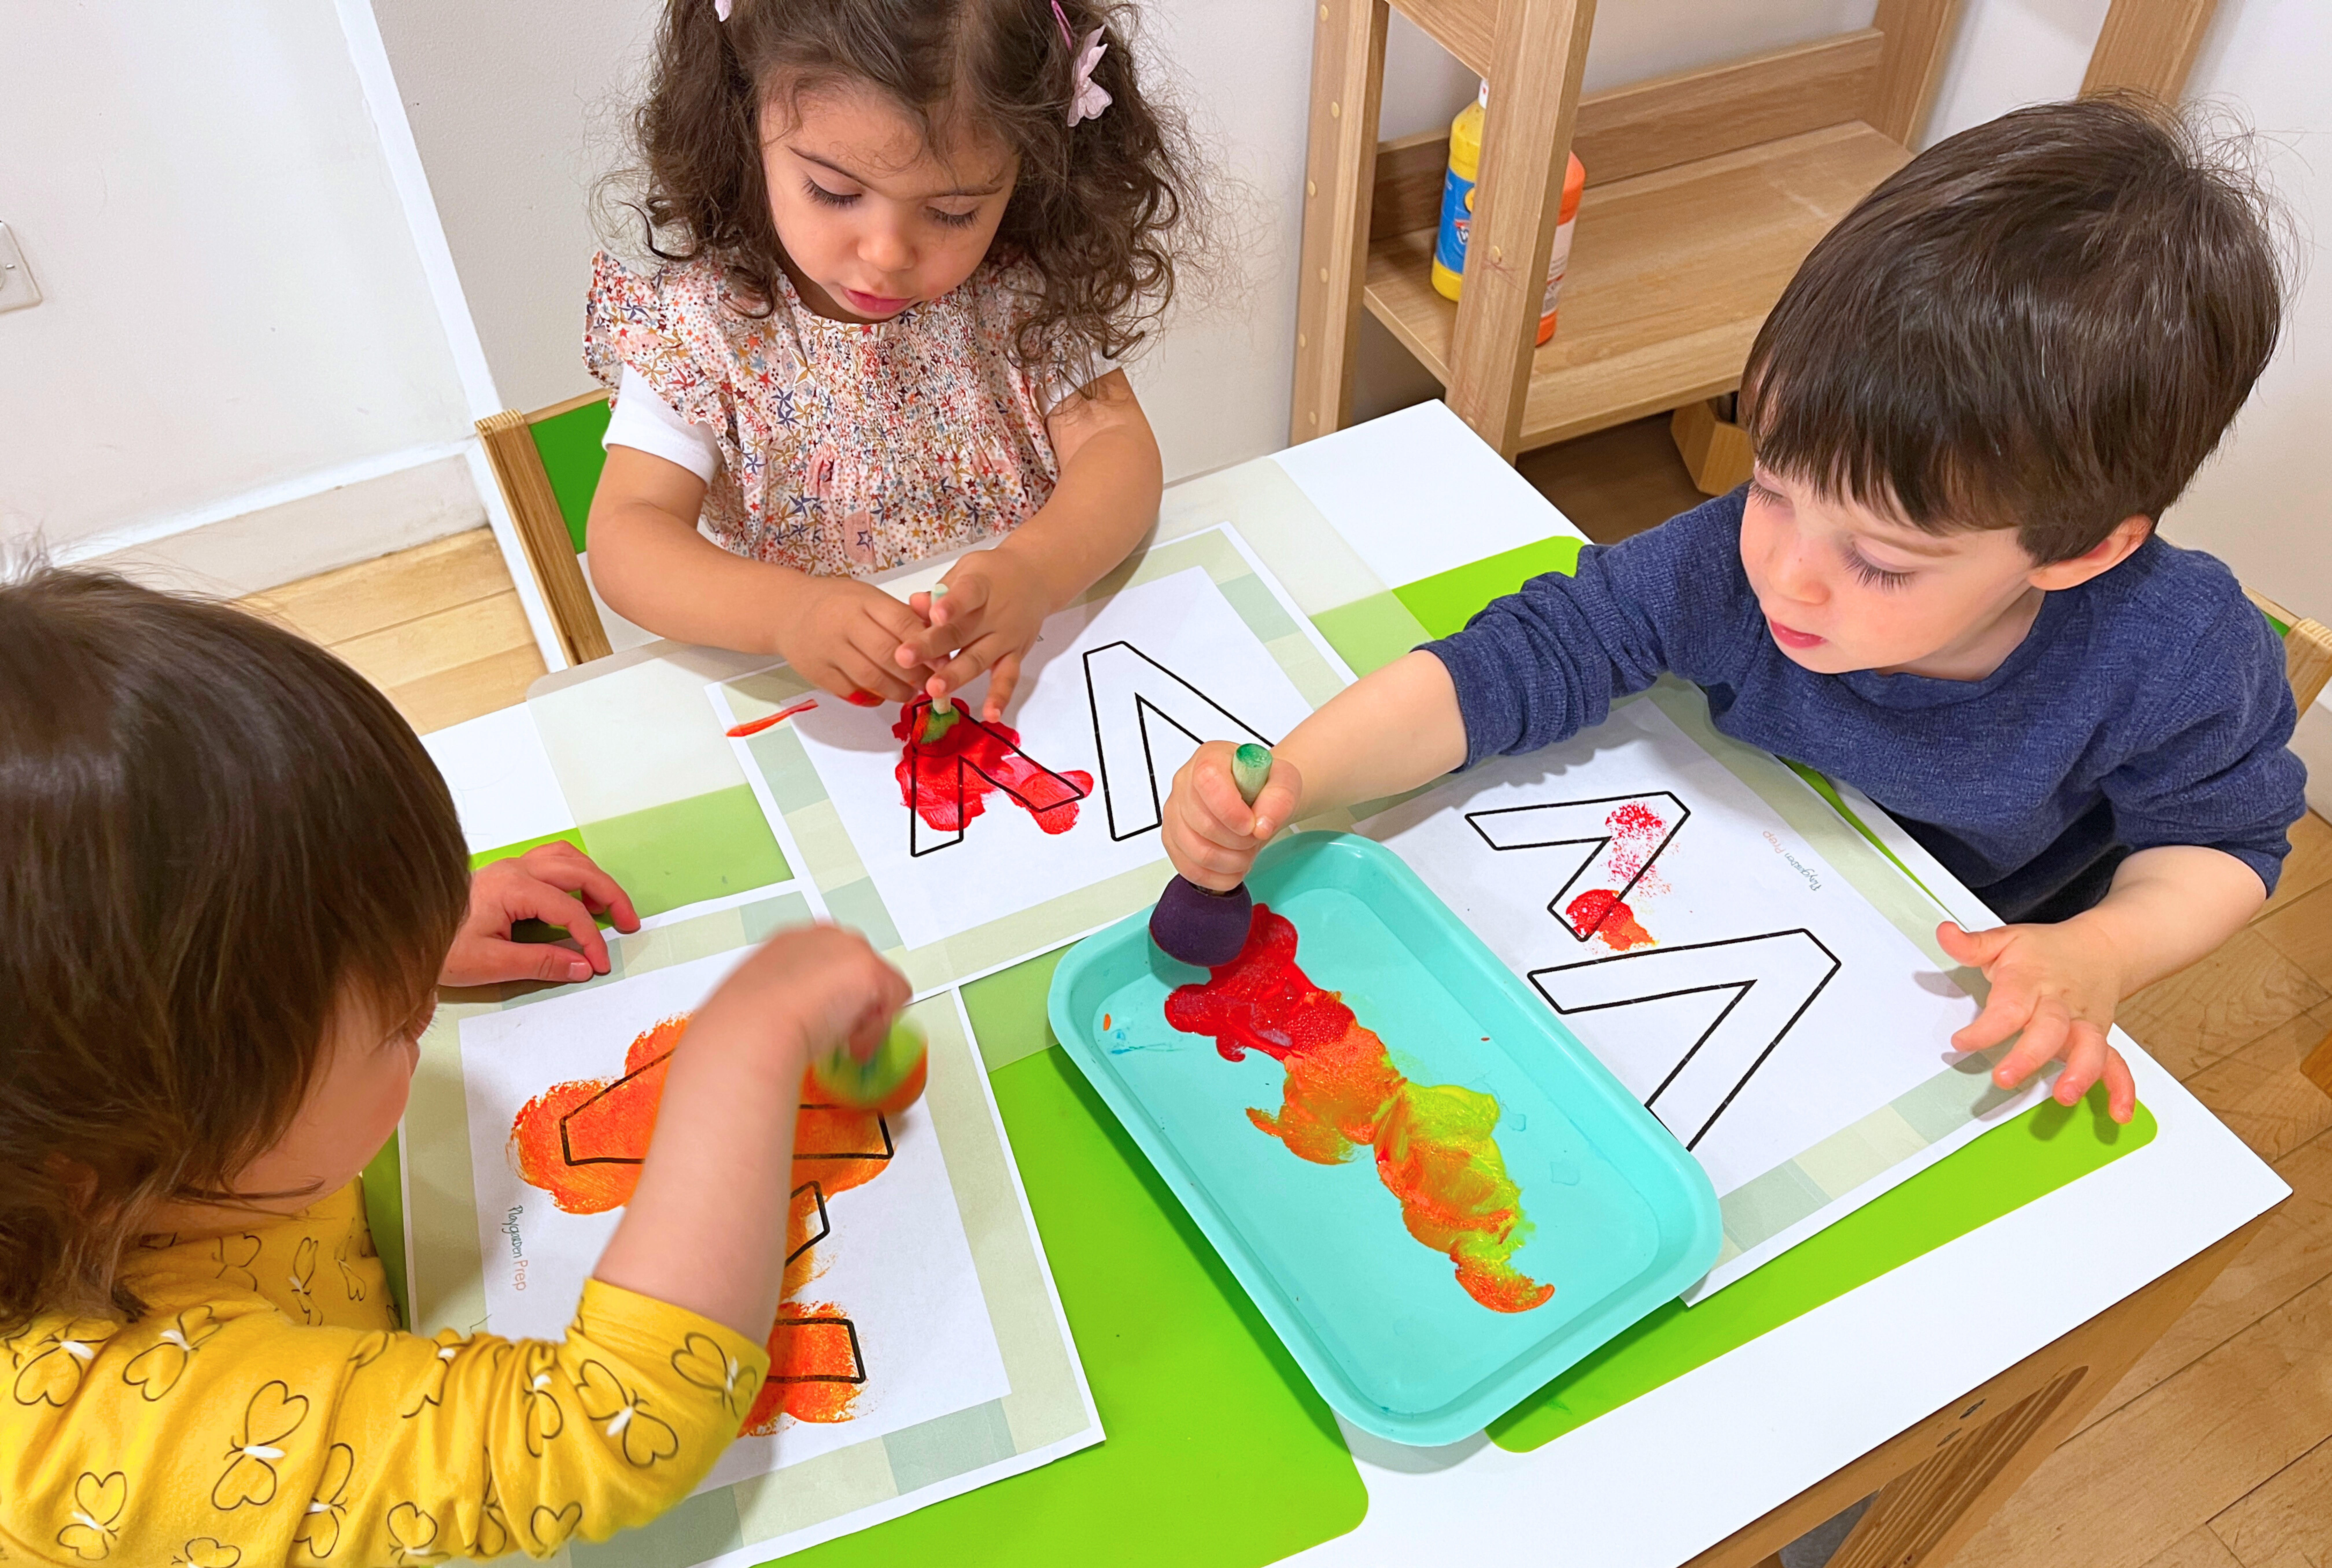 10 Early Signs of Kindergarten Readiness - Playgarden Online